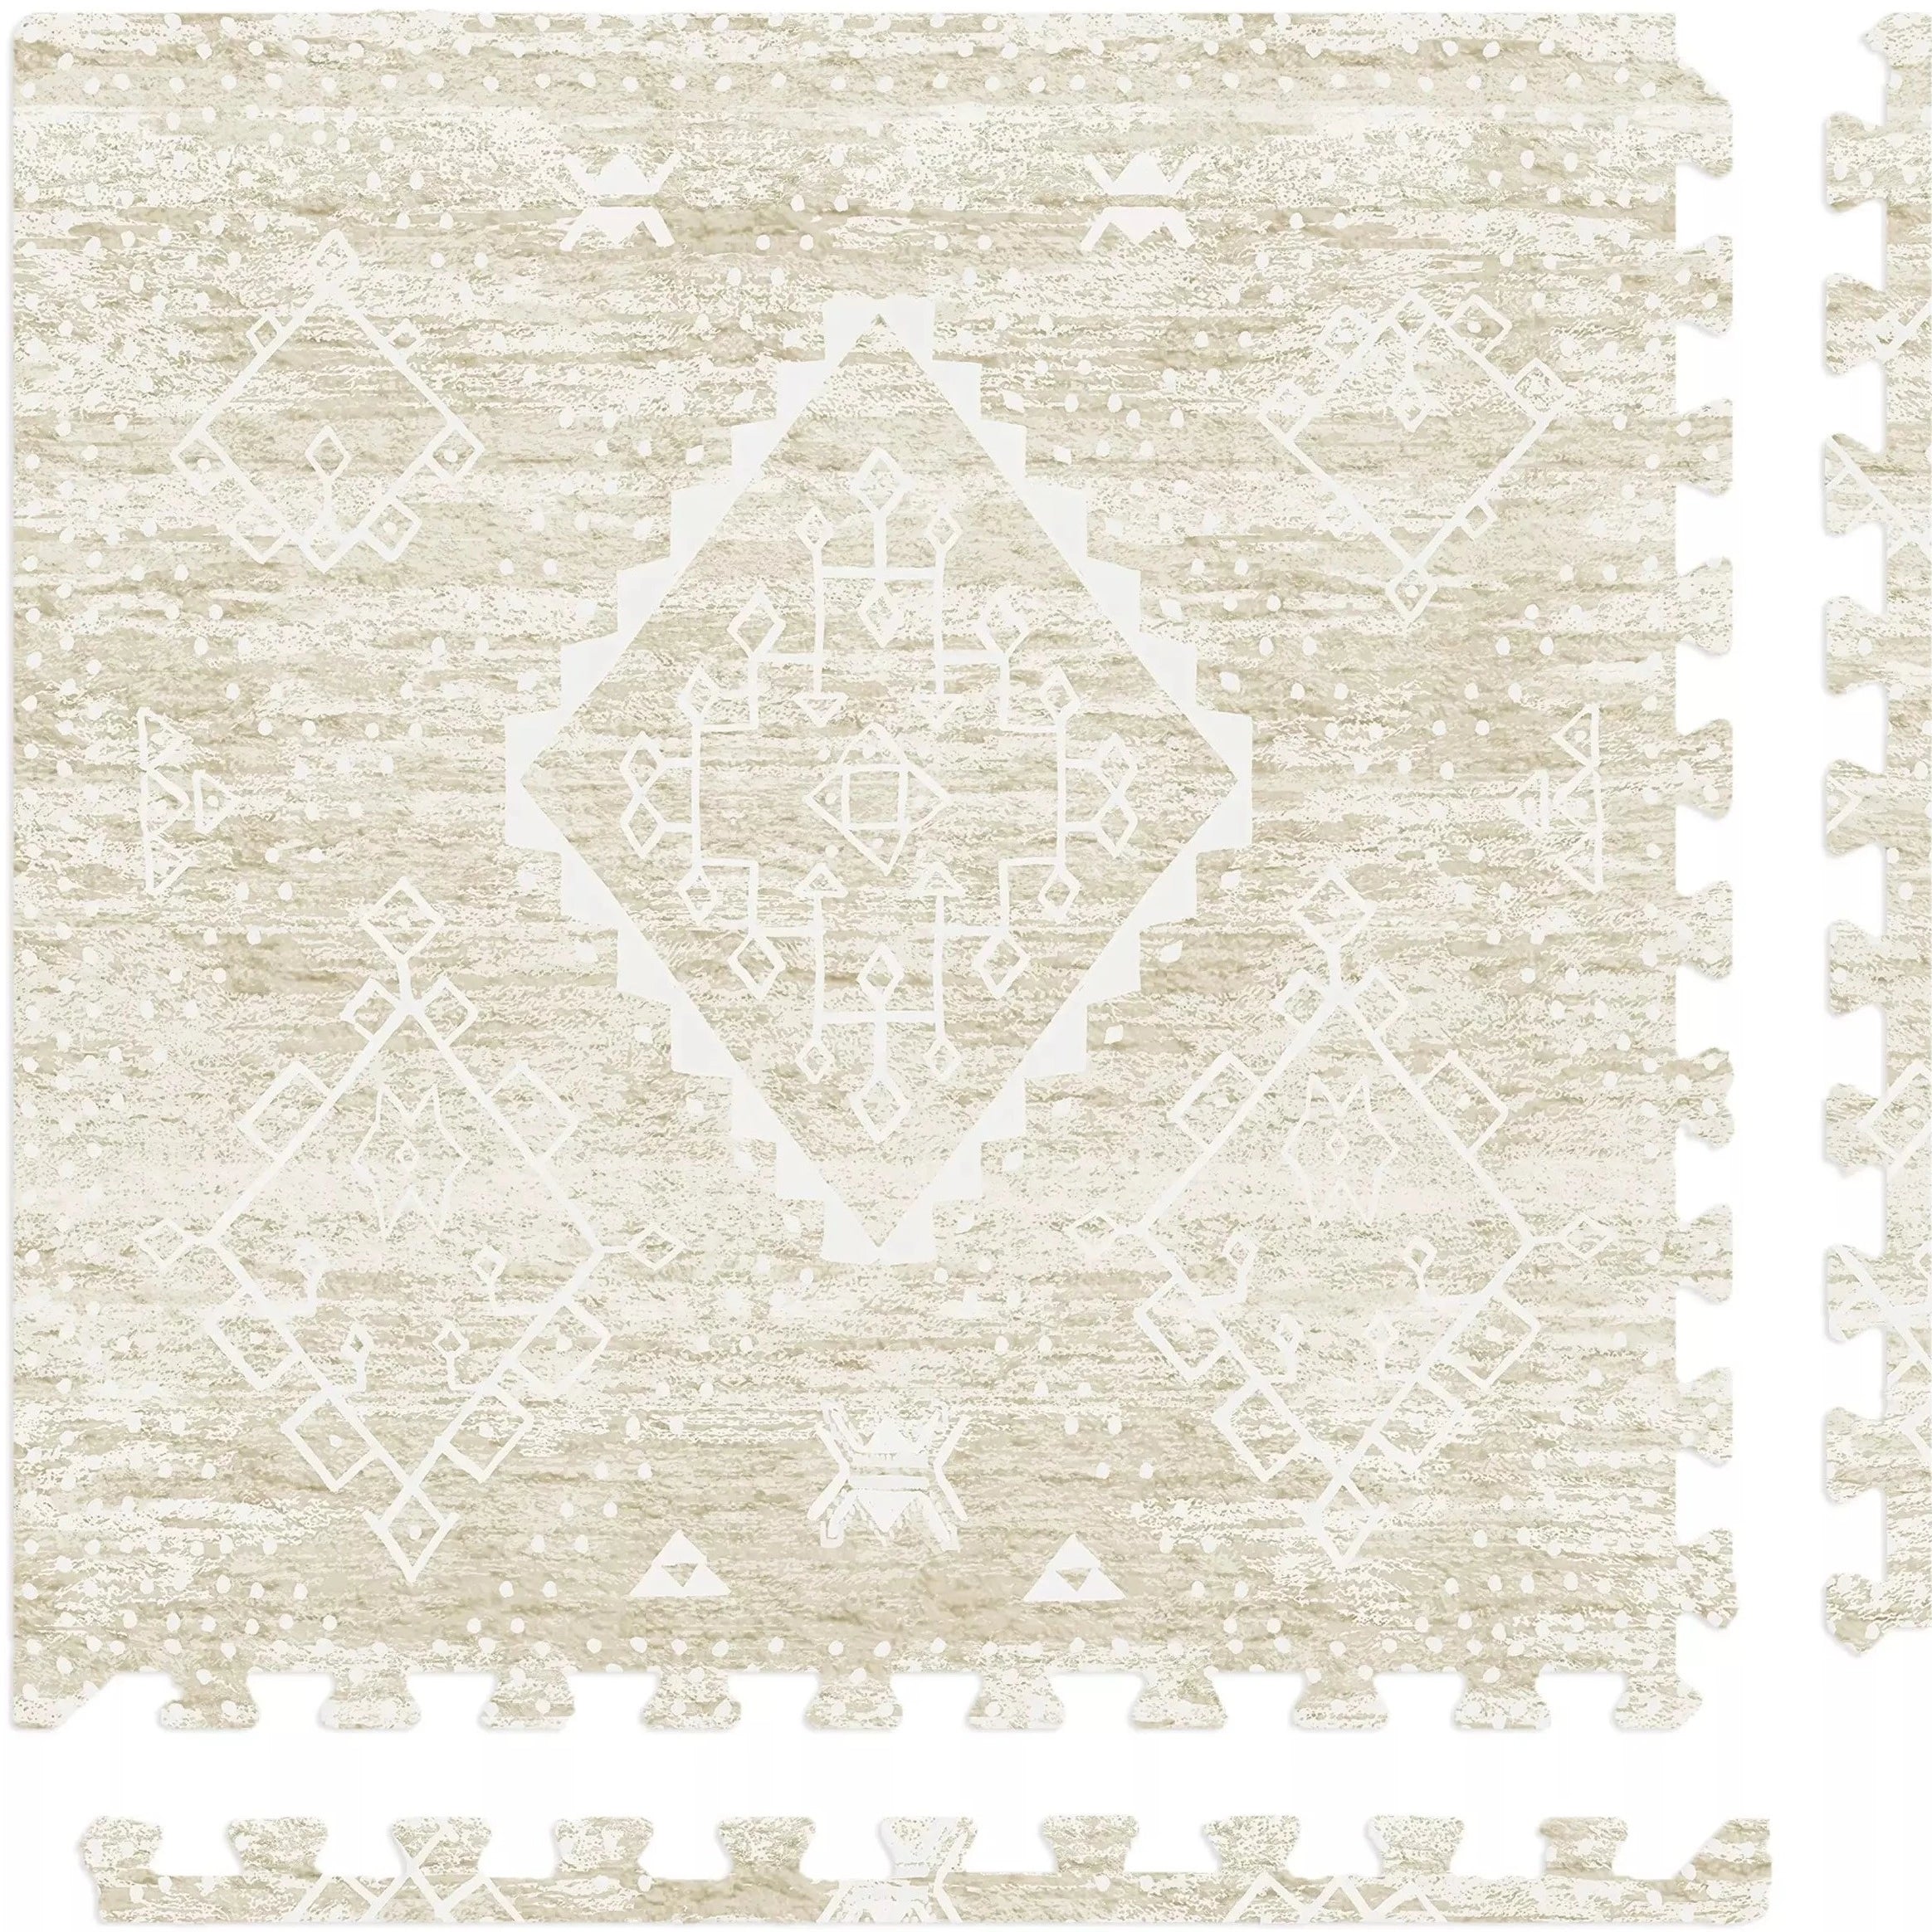 Ula Straw neutral tan minimal boho pattern play mat tile